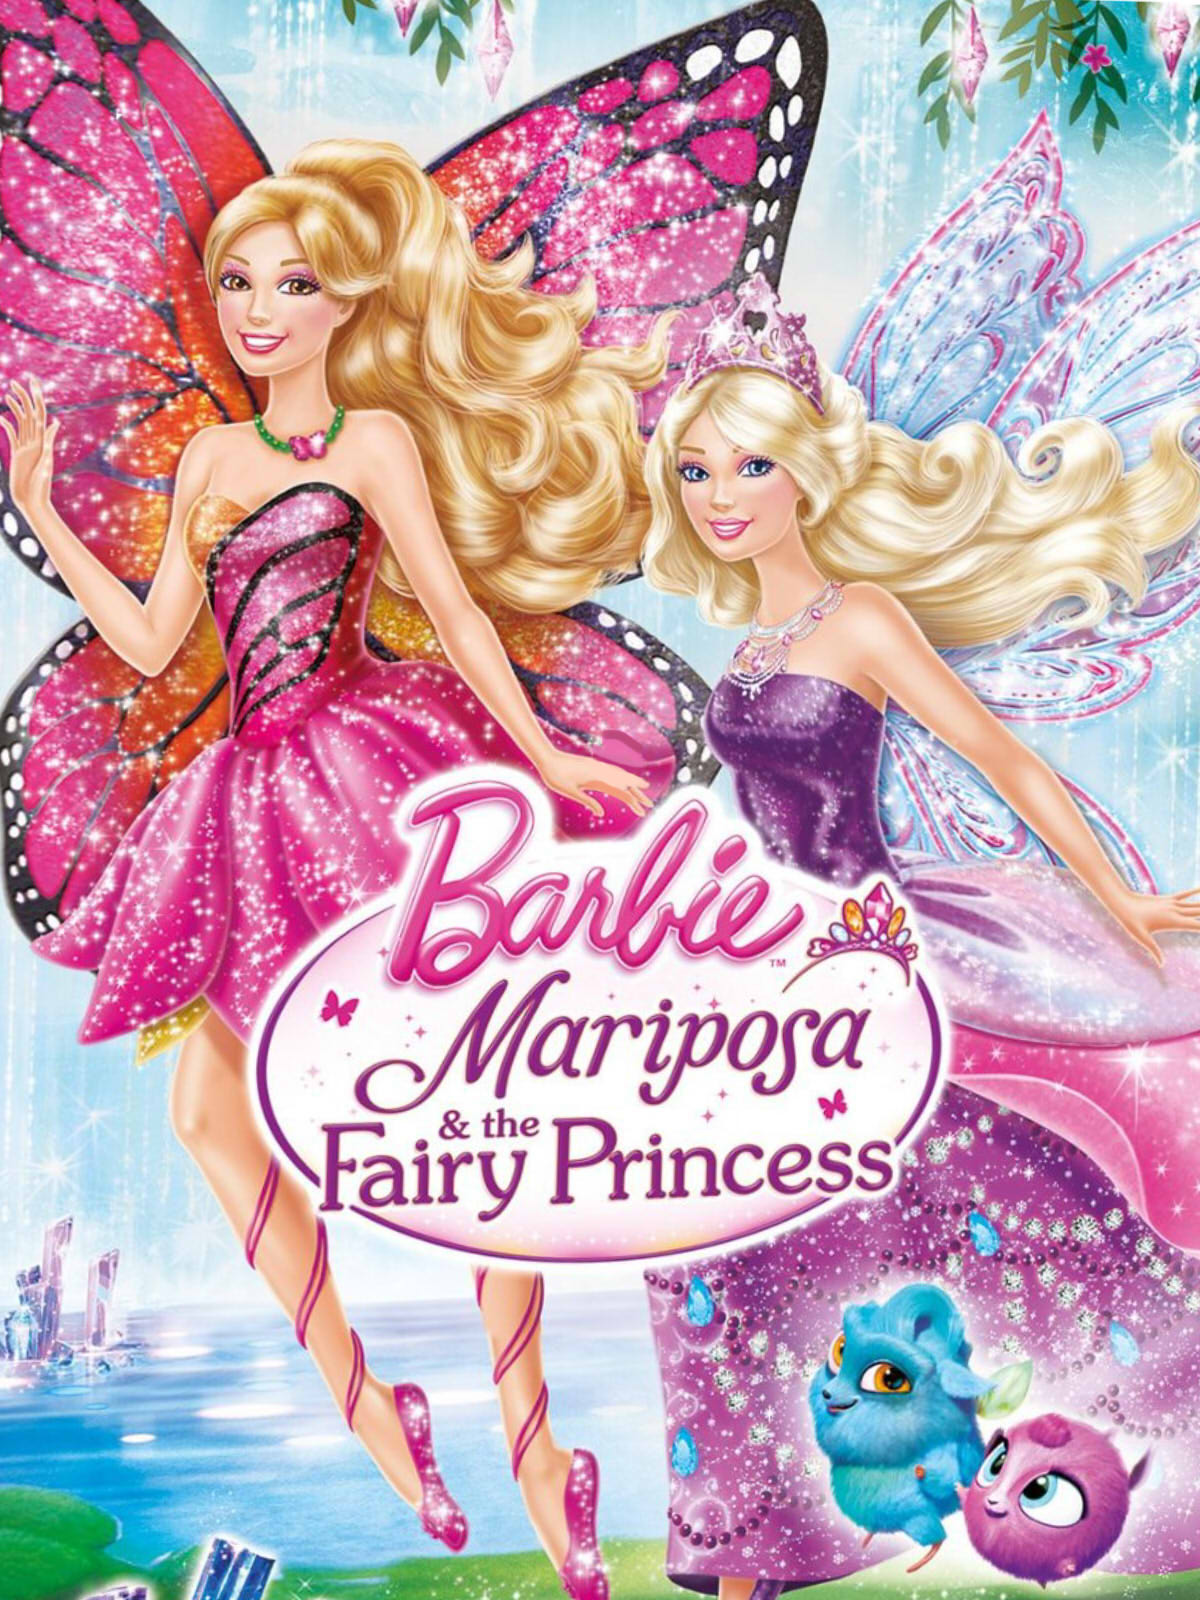 Barbie Mariposa & The Fairy Princess Wallpapers High ...